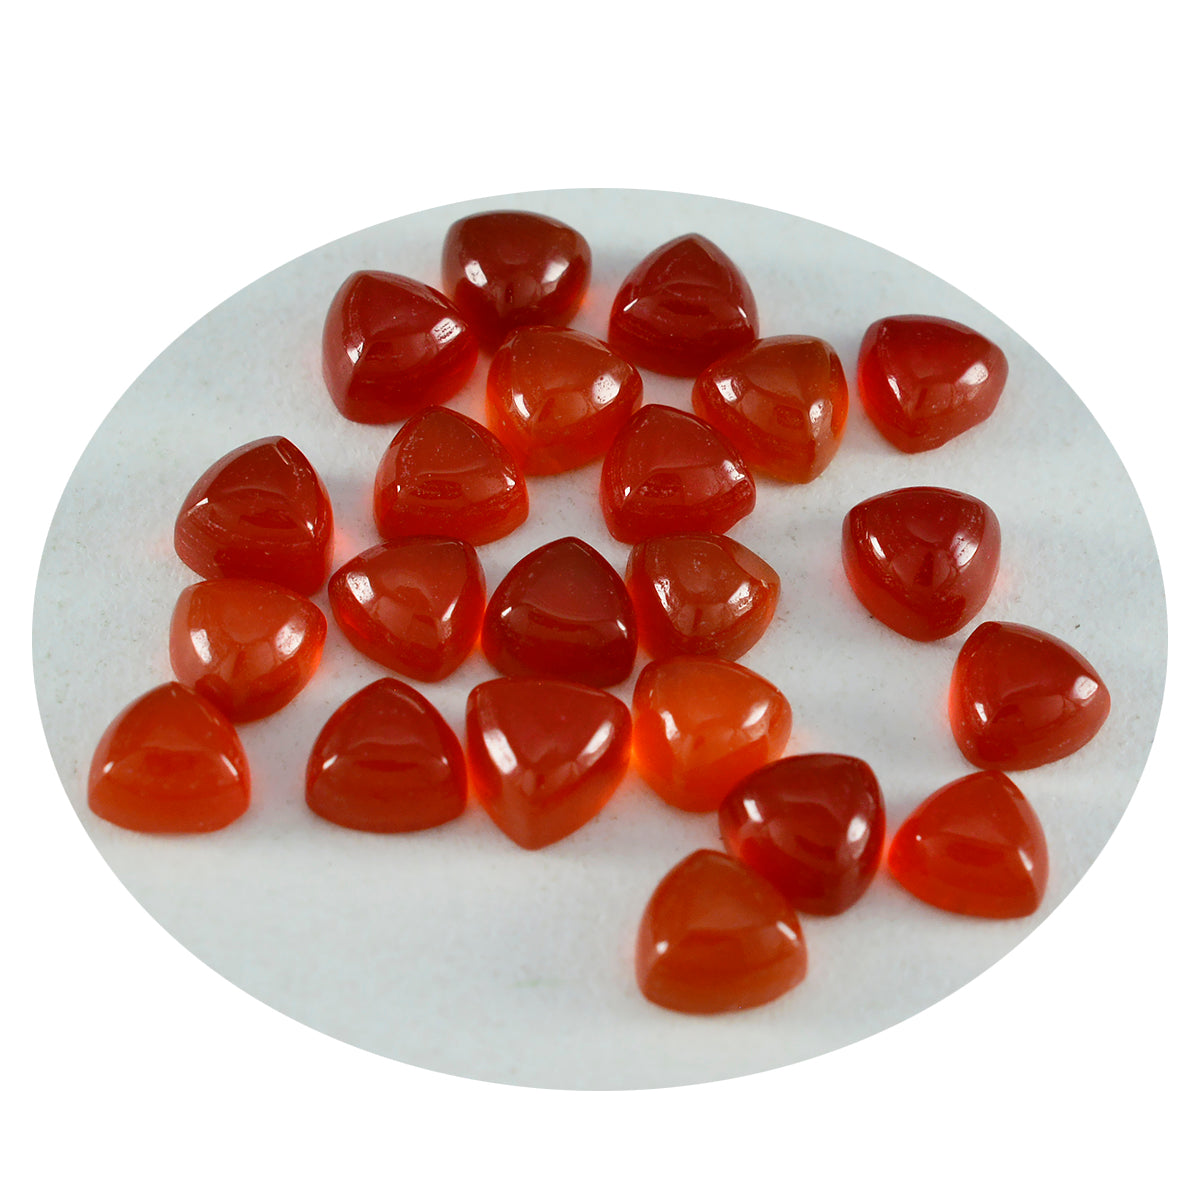 riyogems 1st röd onyx cabochon 6x6 mm biljoner form vacker kvalitetspärla